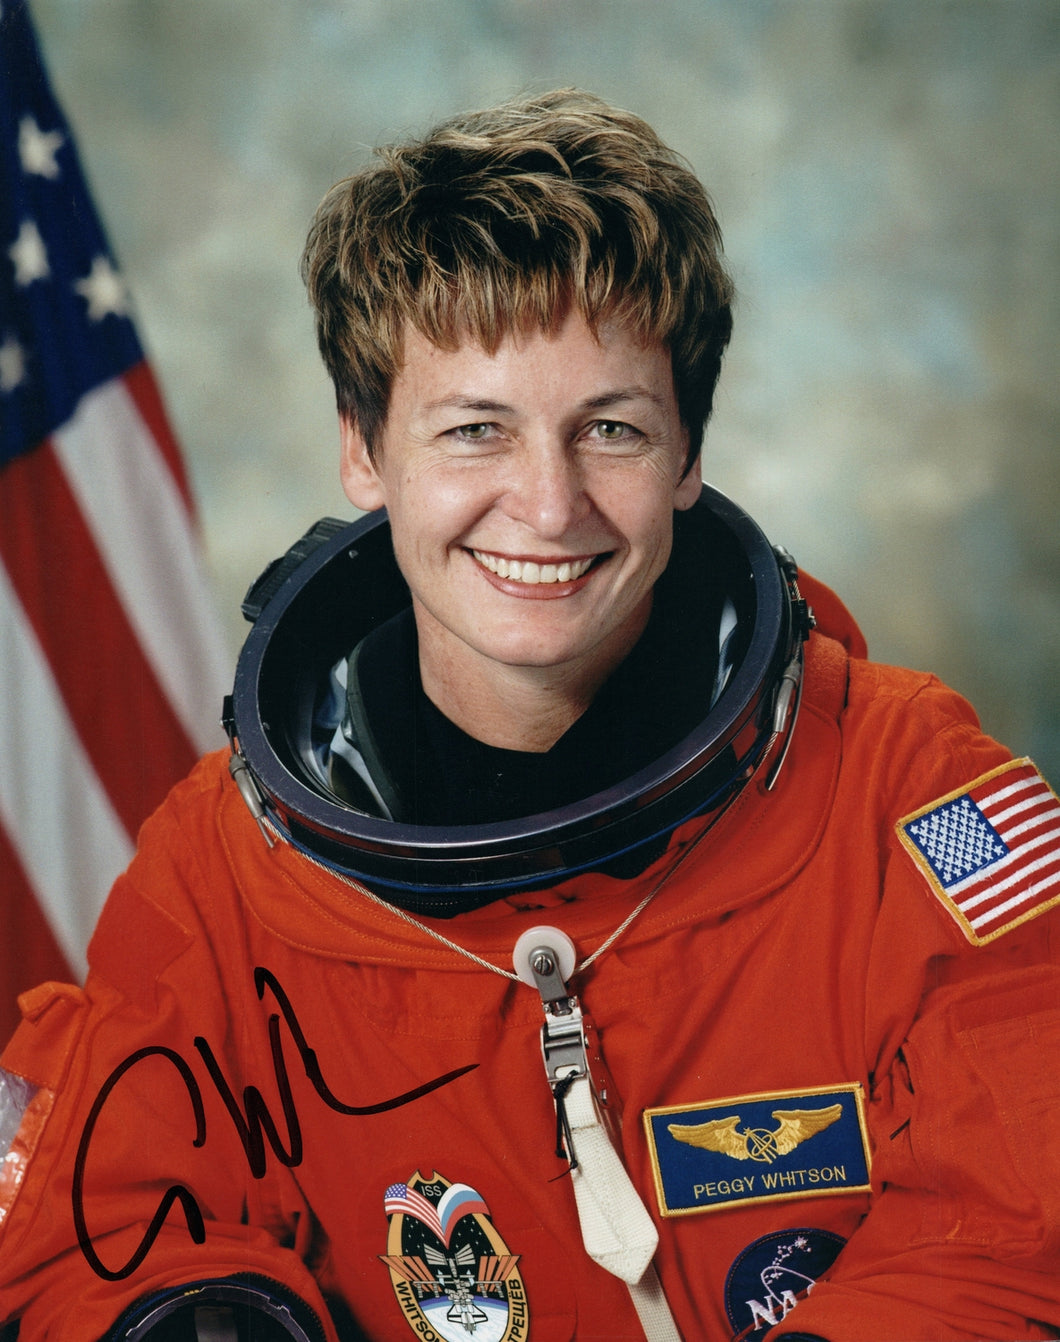 Peggy Whitson Astronaut Autographed 8x10 Photo